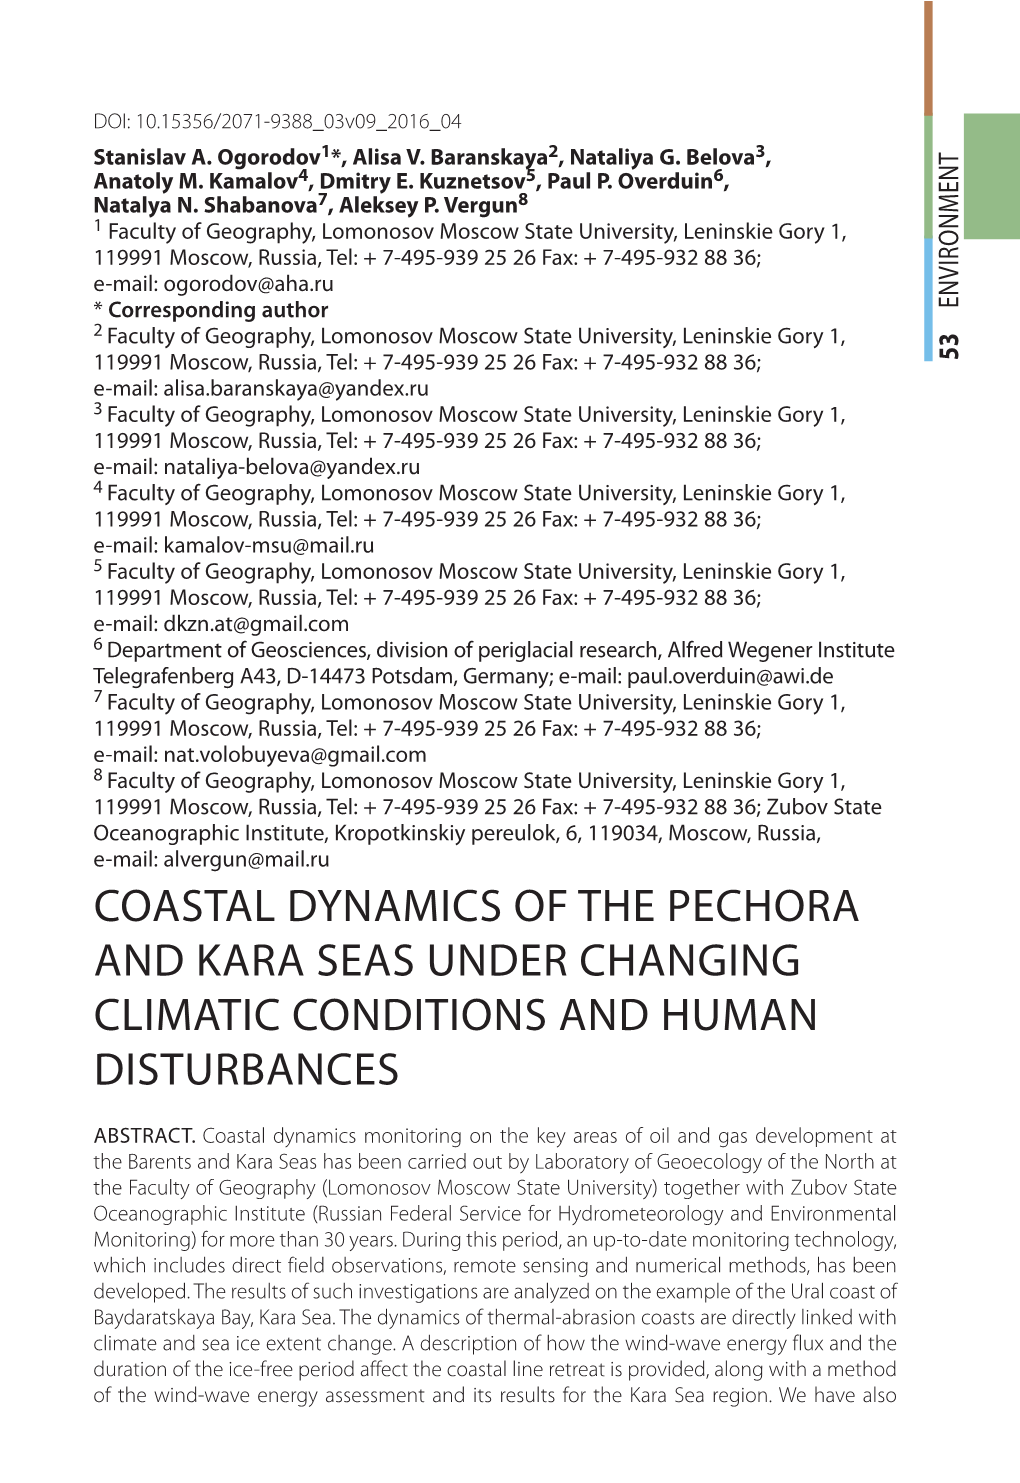 Coastal Dynamics of the Pechora and Kara Seas